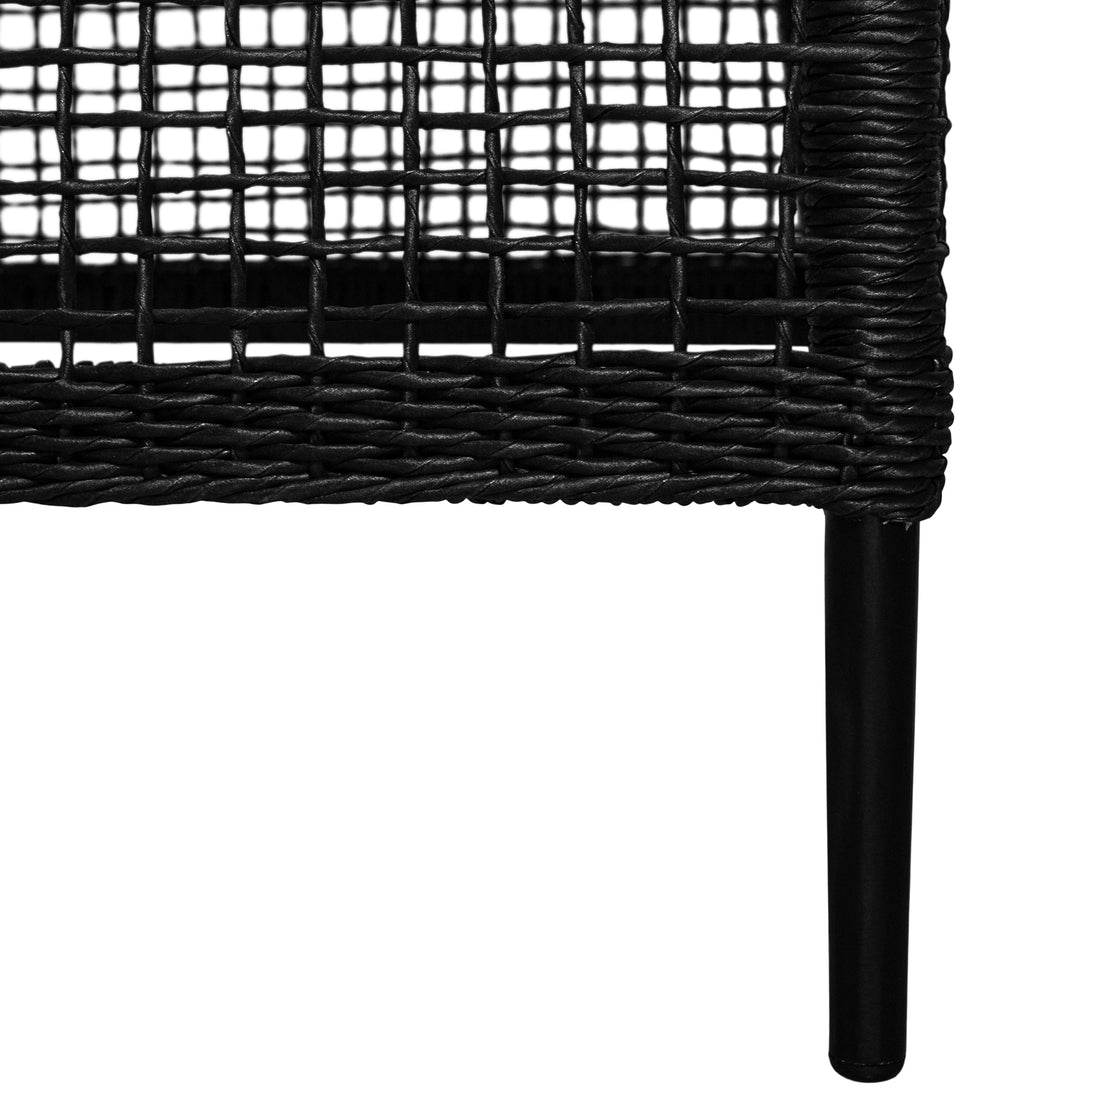 Sanctuary Dining Chair | Black